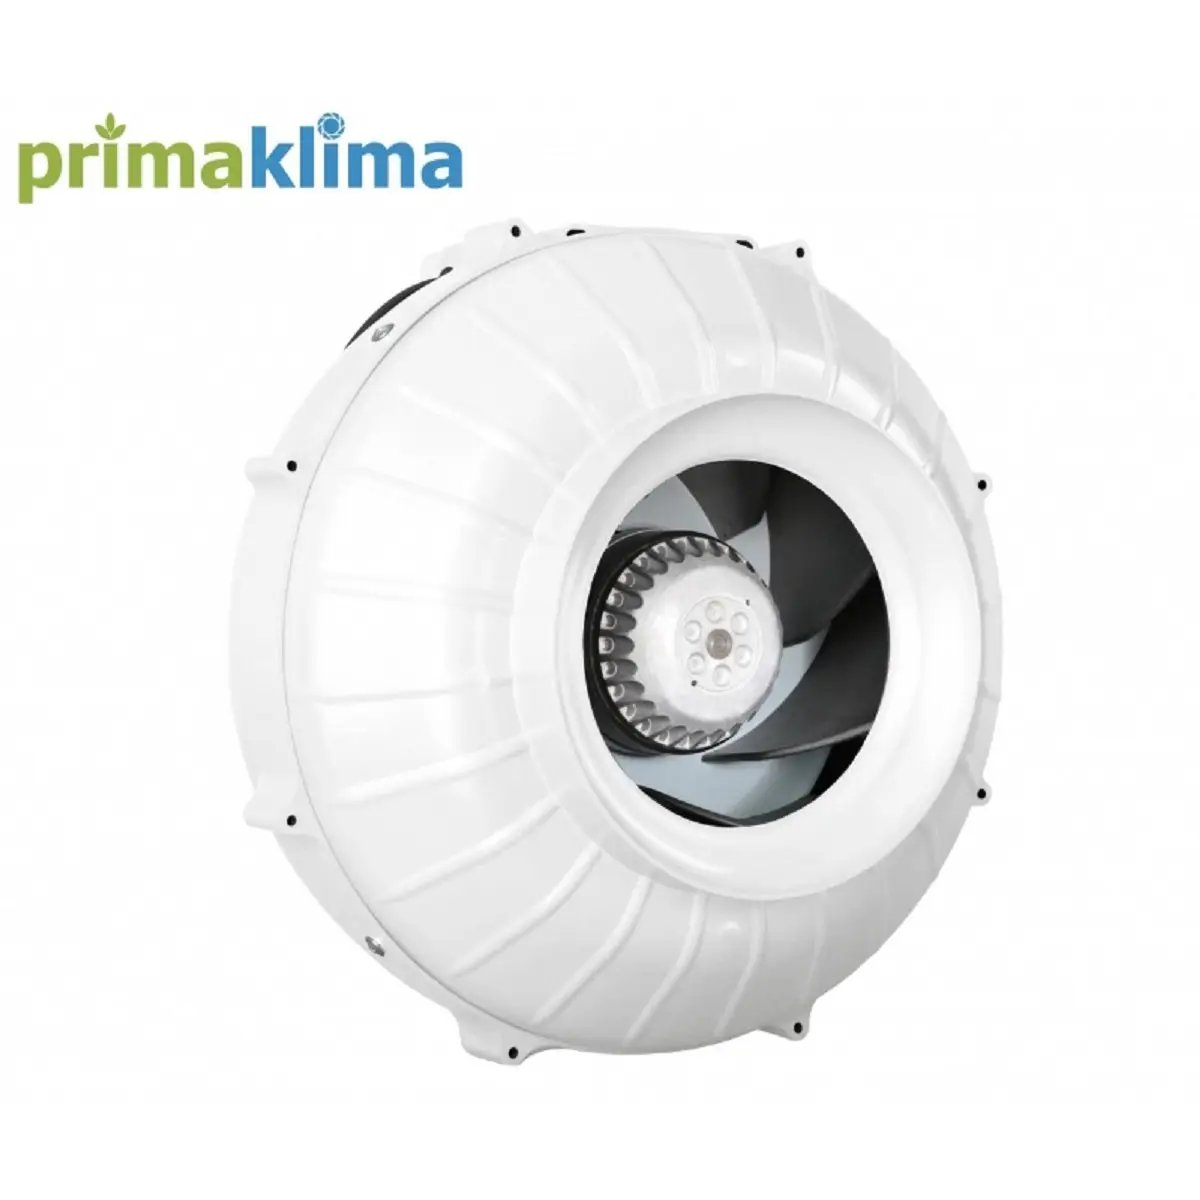 Prima Klima PK200-L (950m3/h) - 200mm